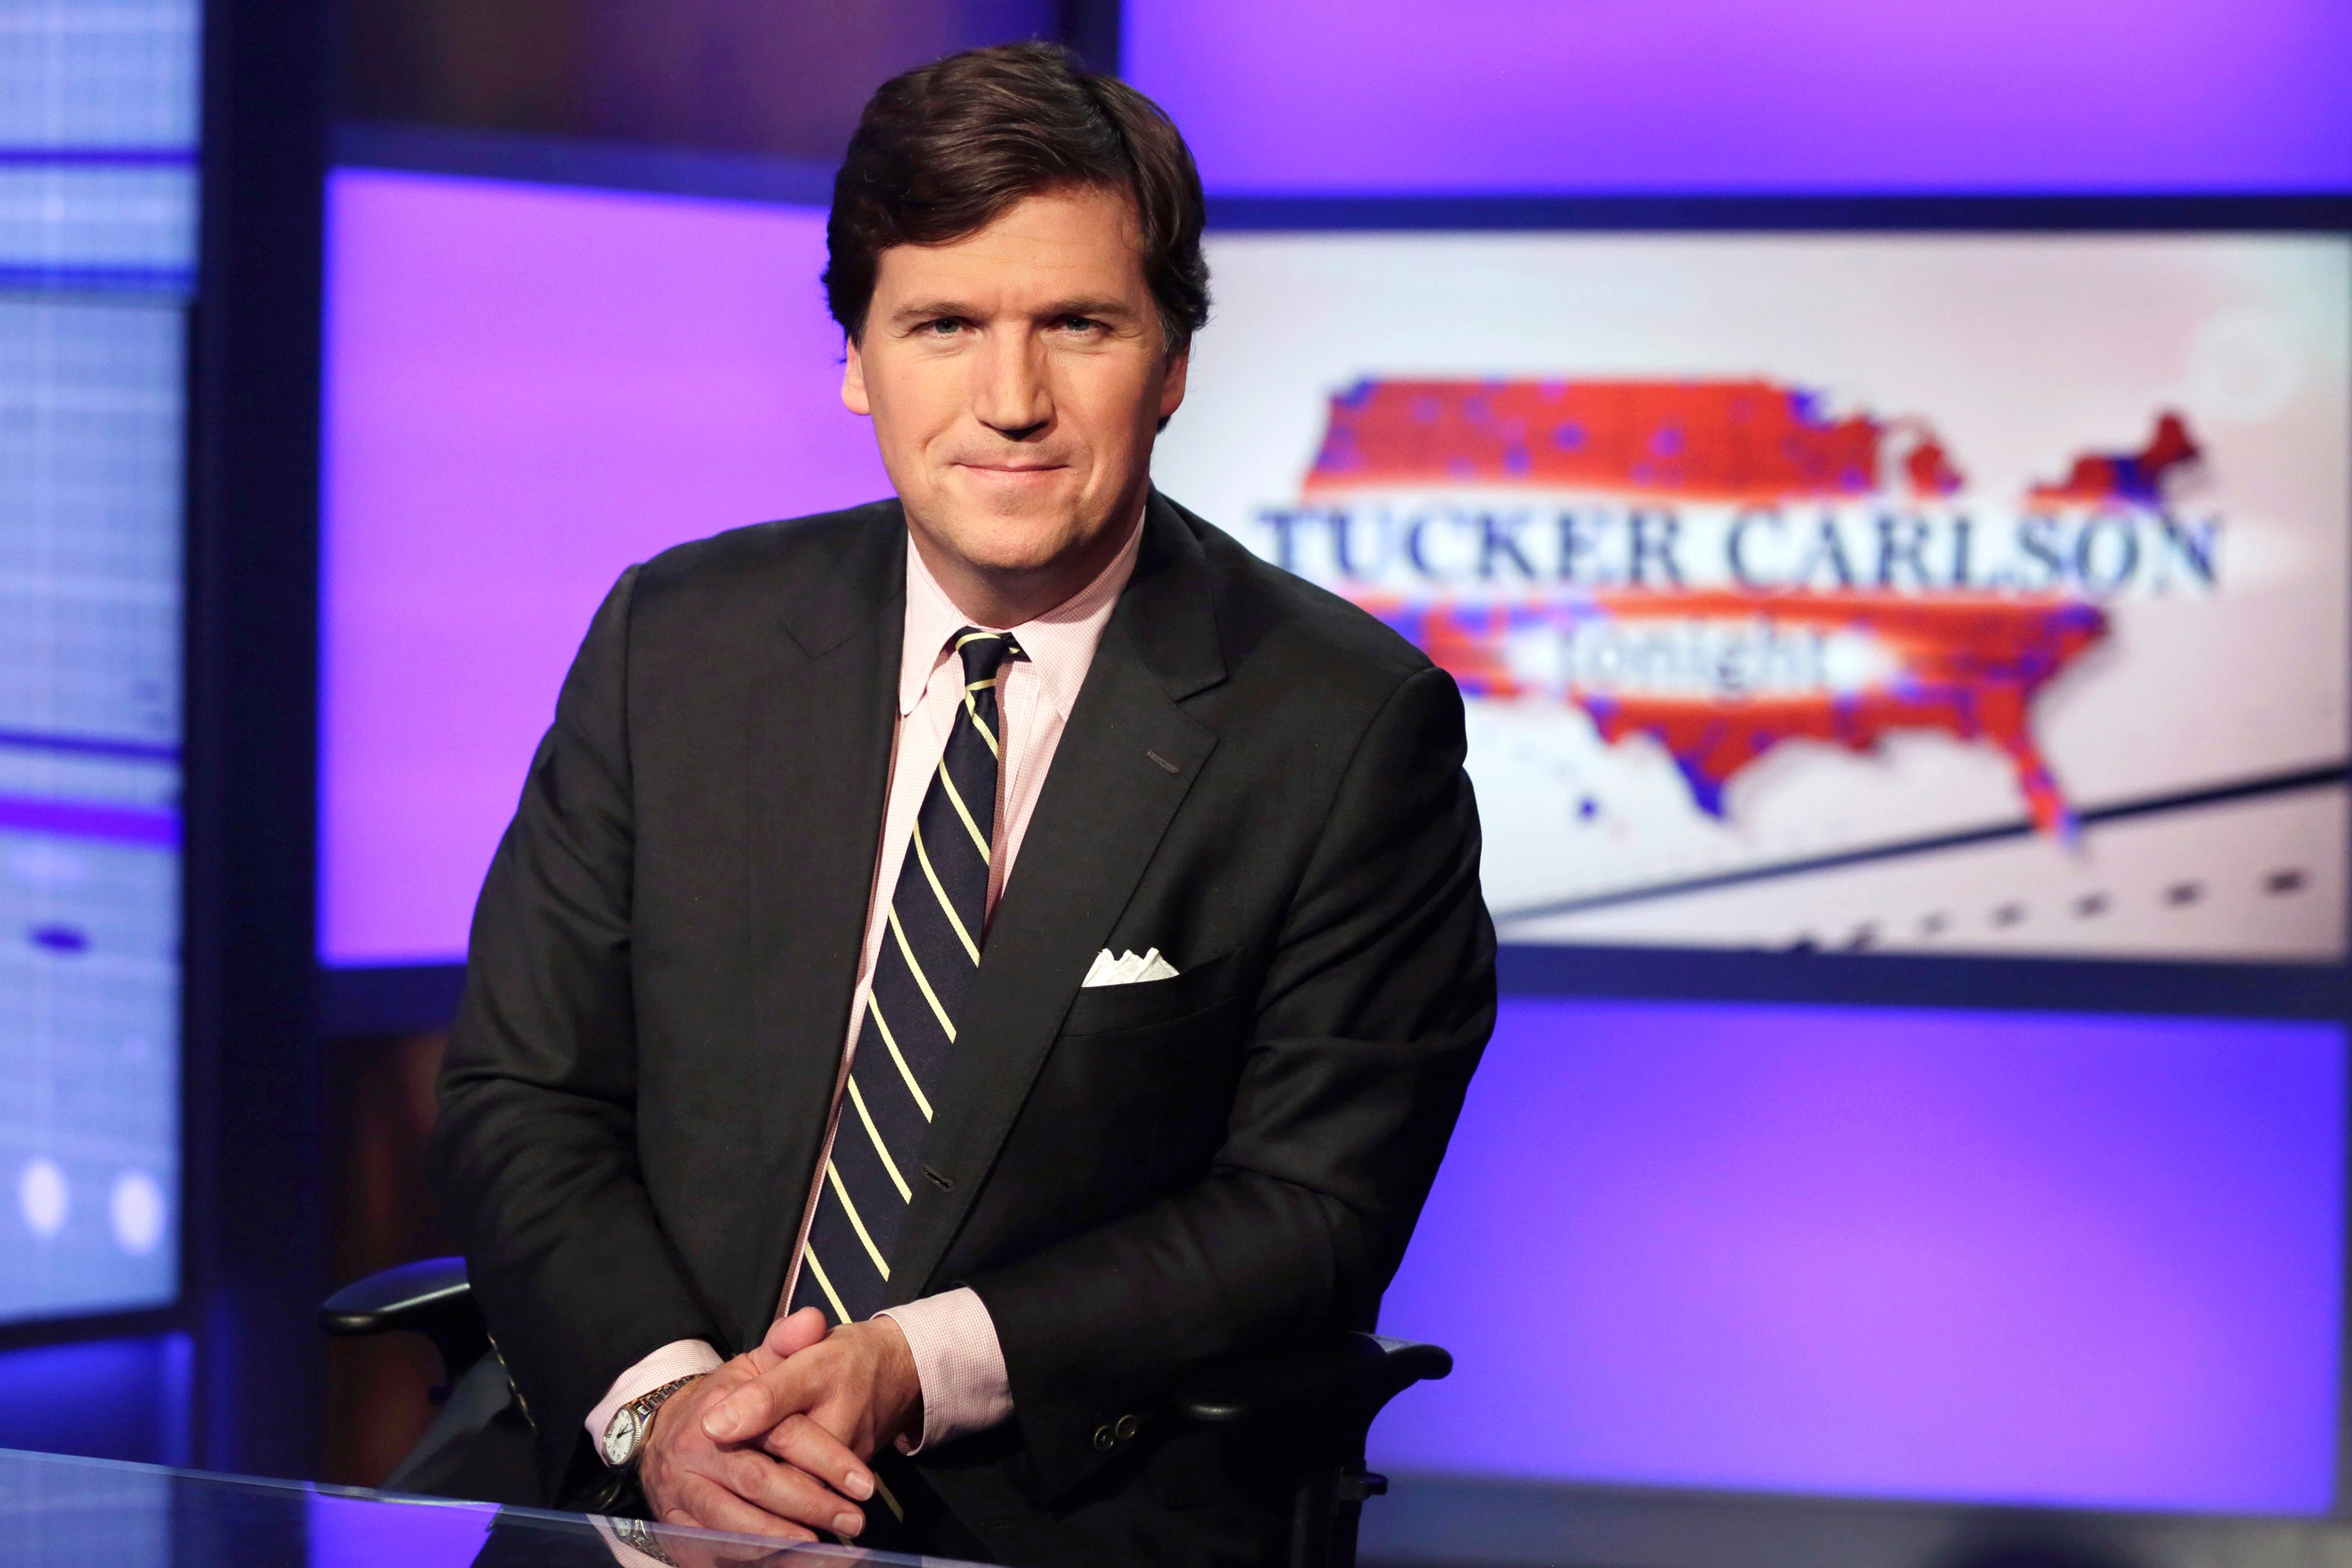 Tucker Carlson in the Fox News studio